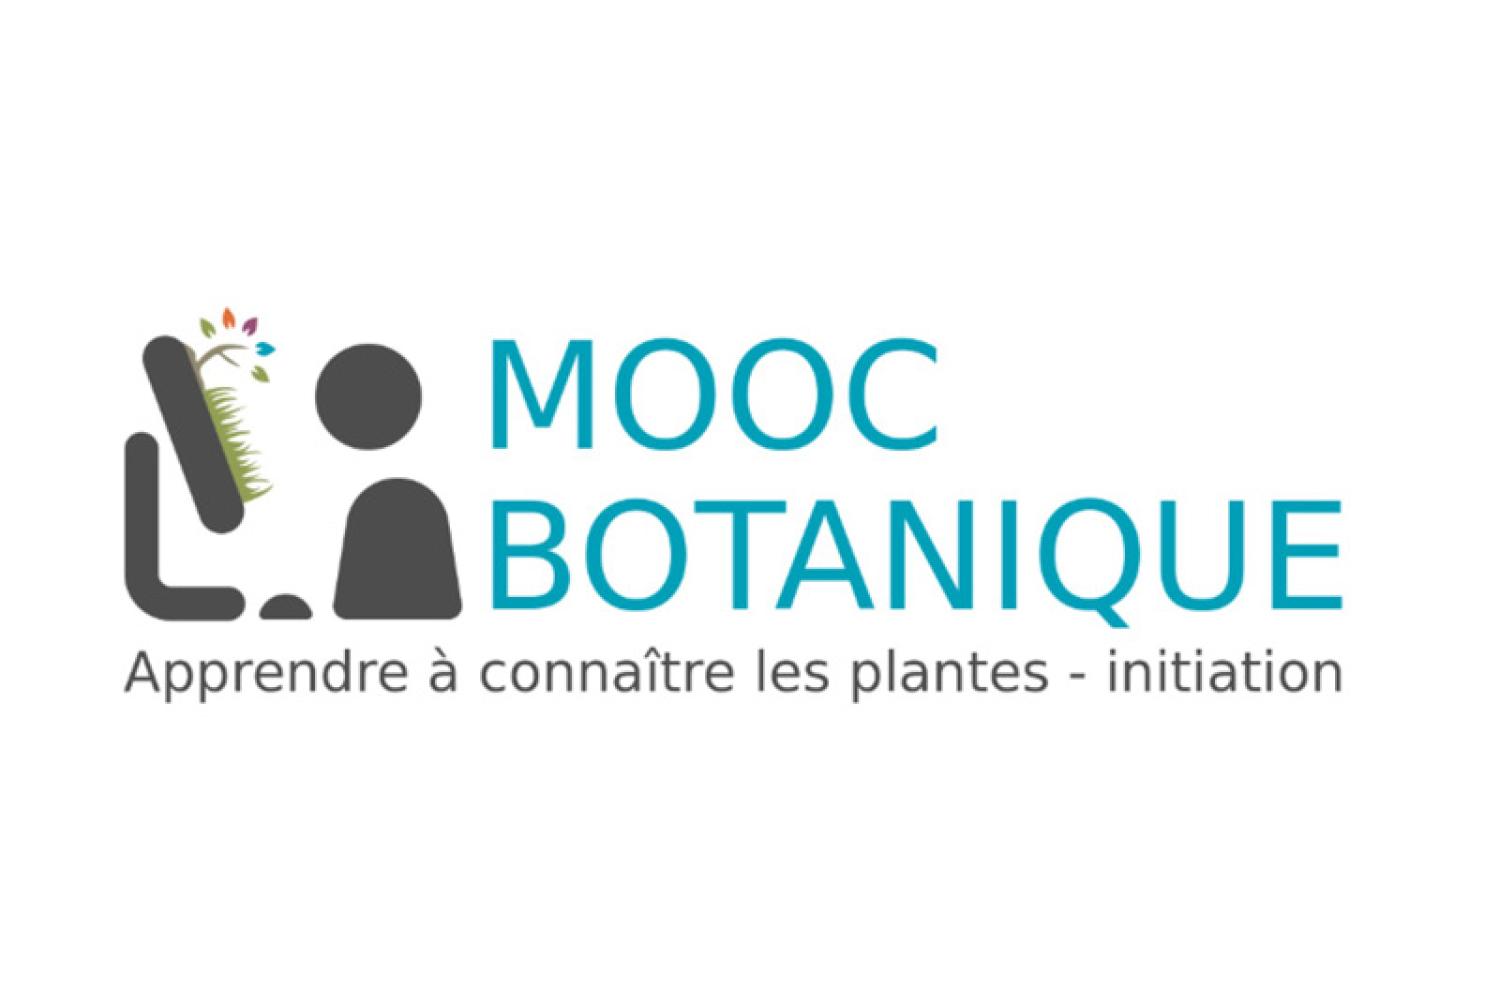 mooc-botanique-800px.jpg